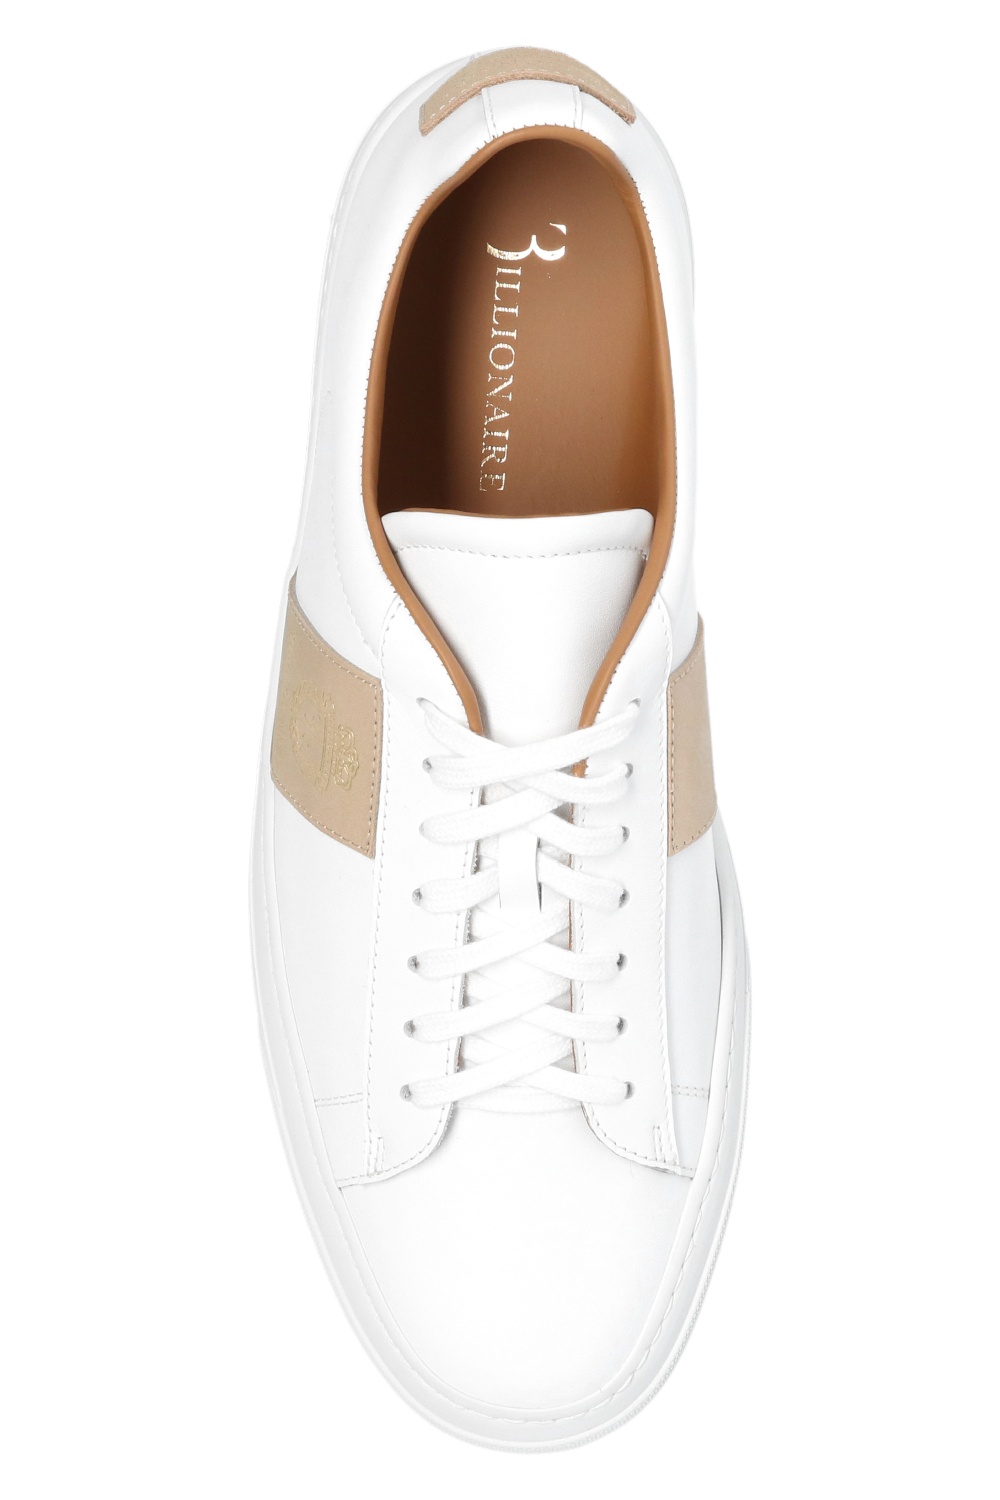 IetpShops Eswatini - Jaden Smith in Louis Vuitton Sneakers Billionaire - Chuck  Taylor All Star Platform Leather High-Top Sneakers